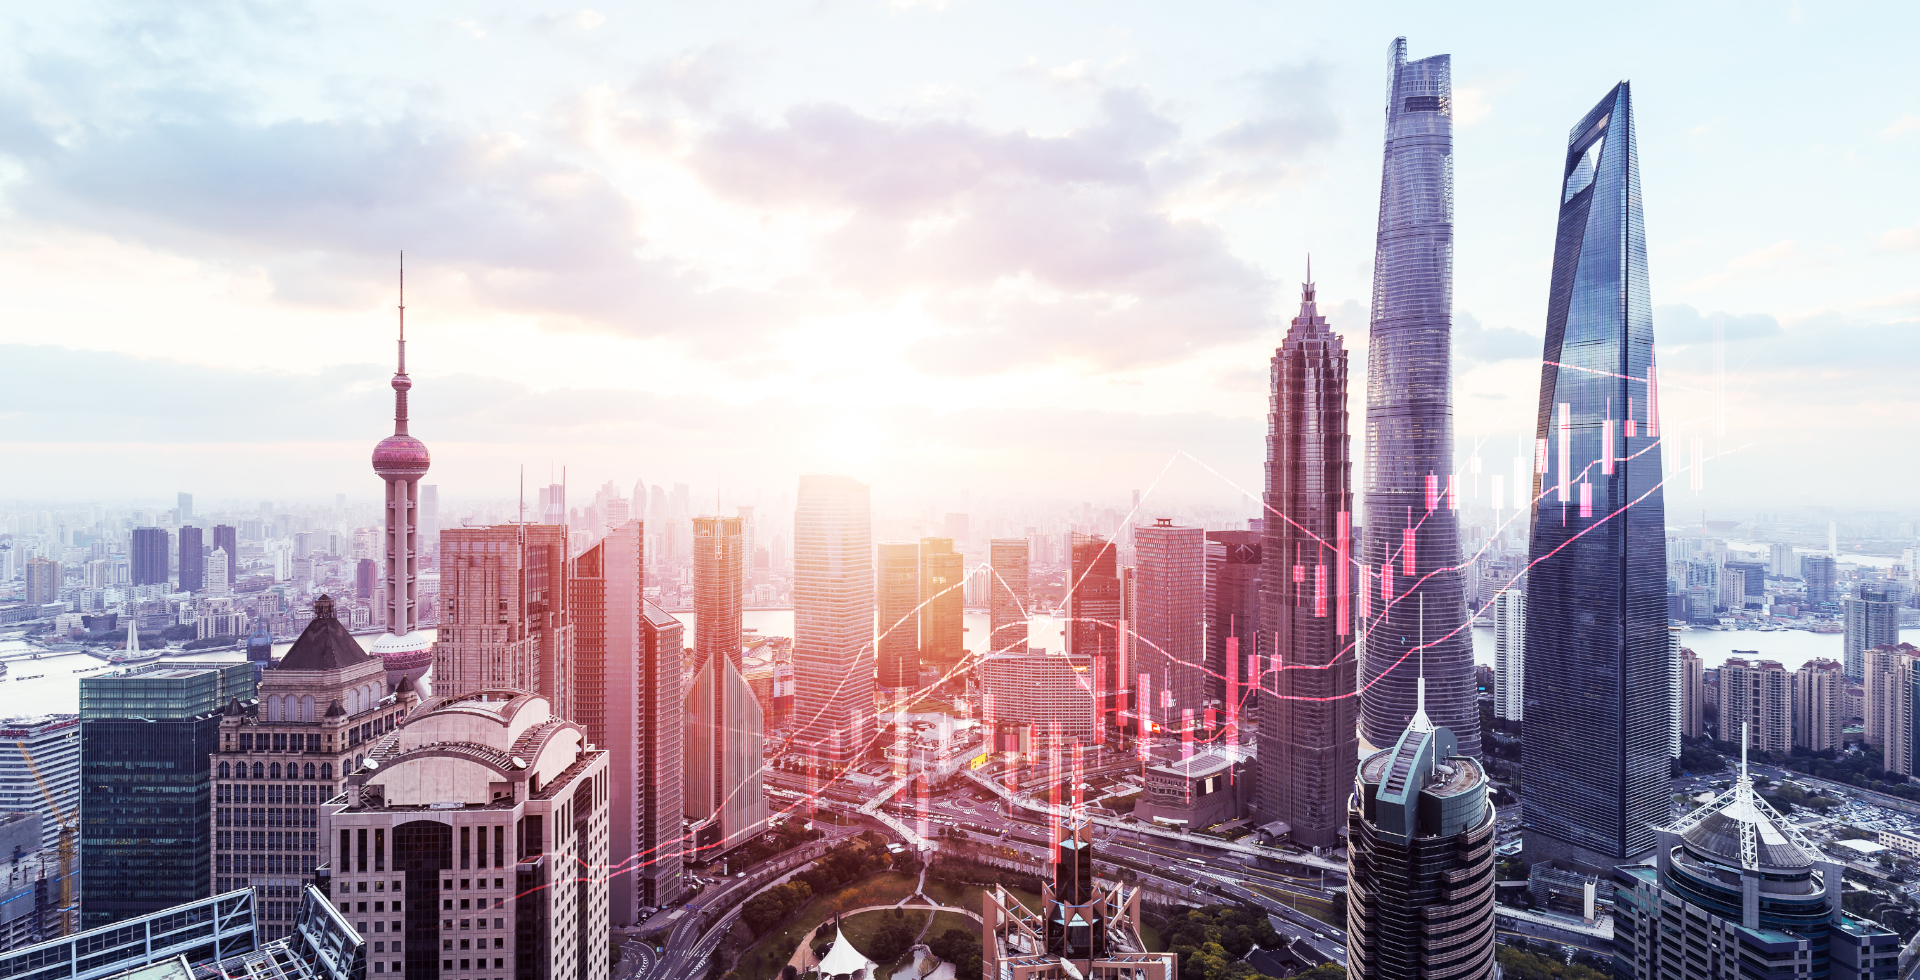 Shanghai image: China's biggest city and a global financial hub